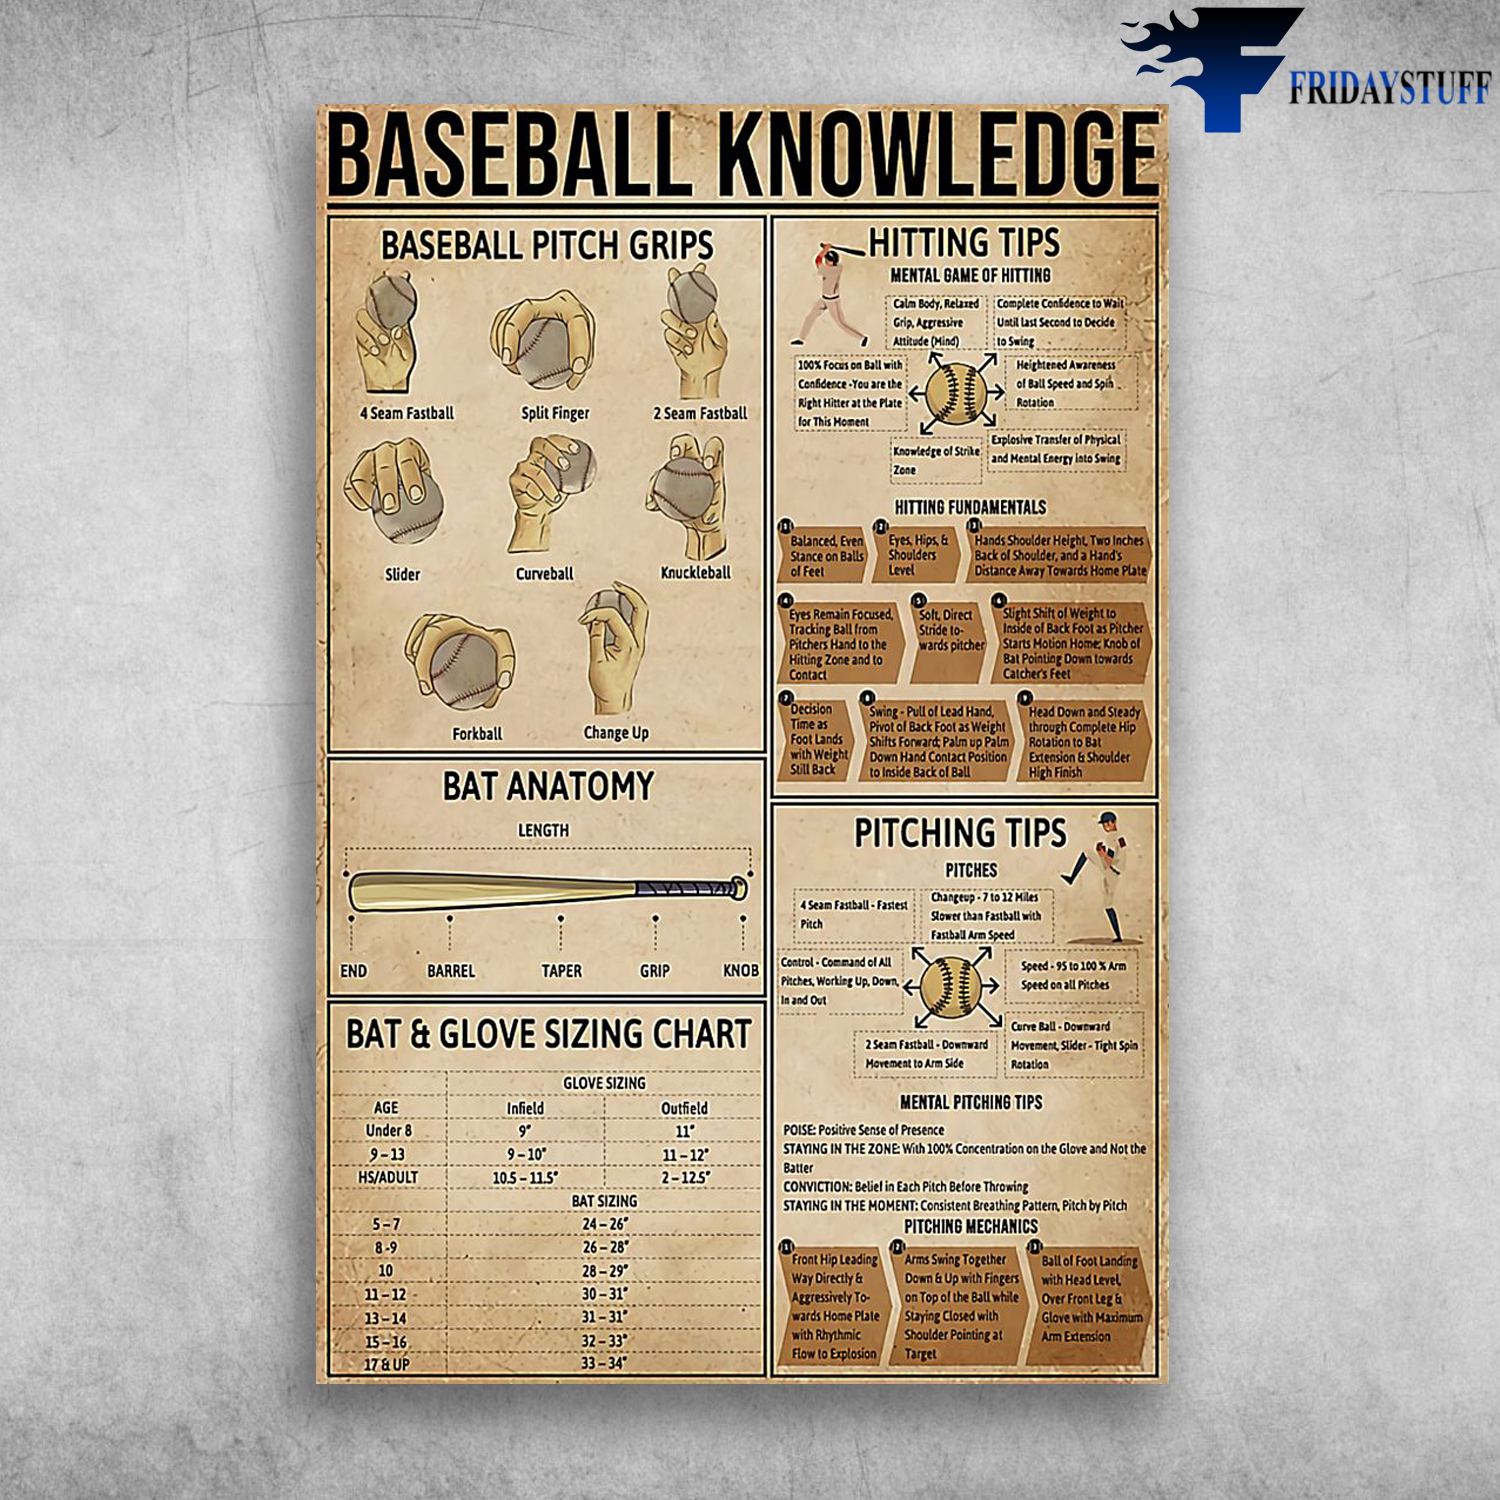 Baseball Knowledge - Baseball Pitch Grips - Hitting Tips